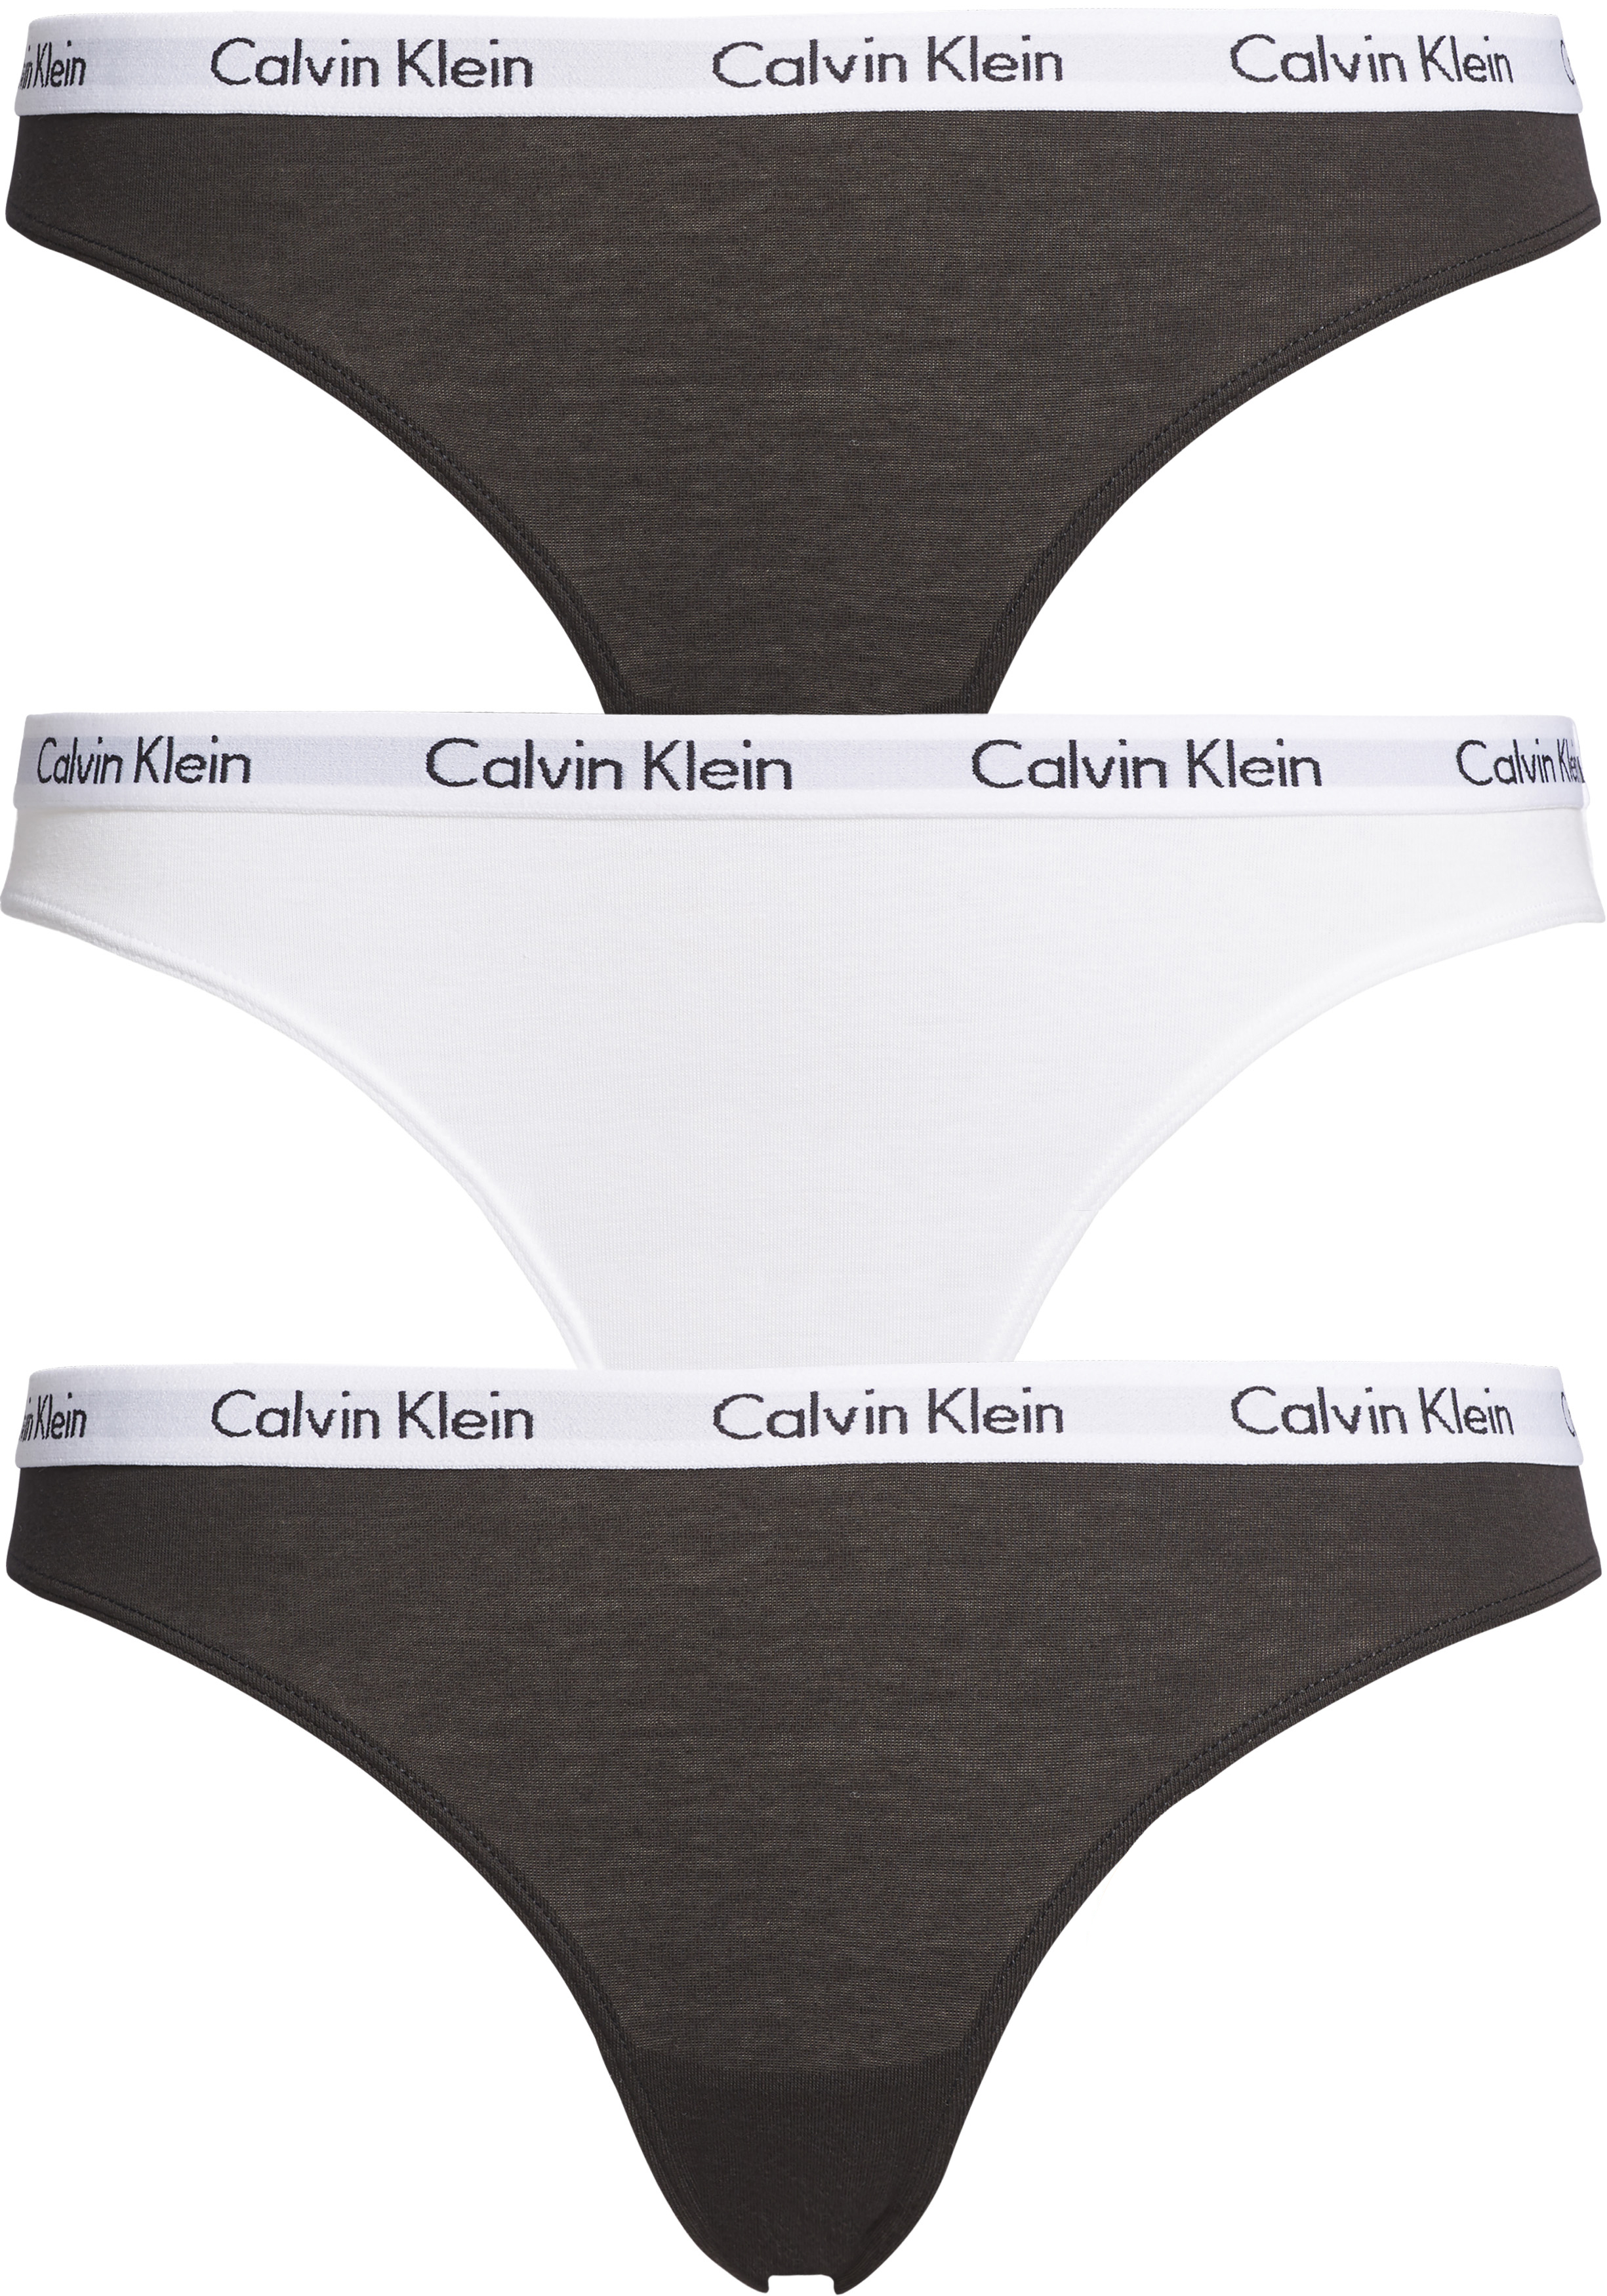 Bacteriën resterend Internationale Calvin Klein dames slips (3-pack), zwart, wit en zwart - Zomer SALE tot 50%  korting